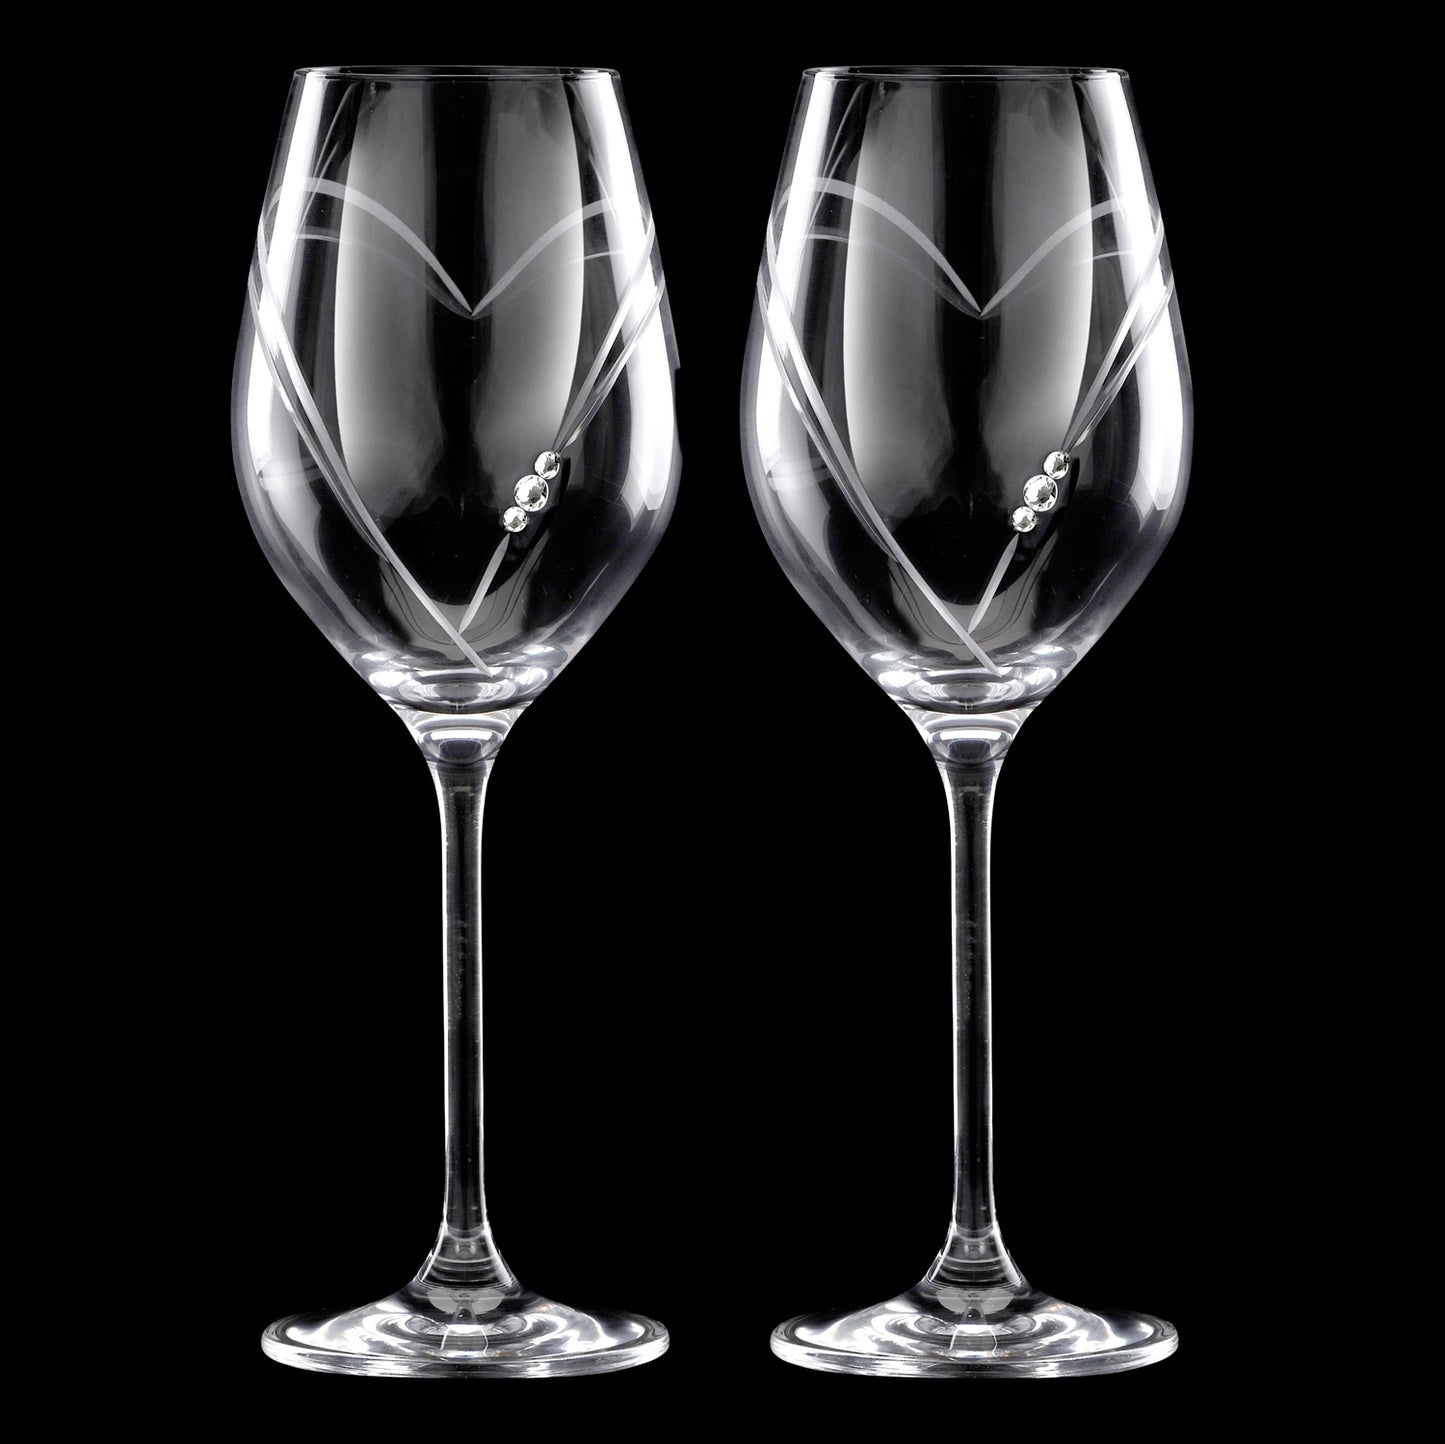 Matrivo White wine glass with Swarovski crystals - 2 pcs. Two Hearts